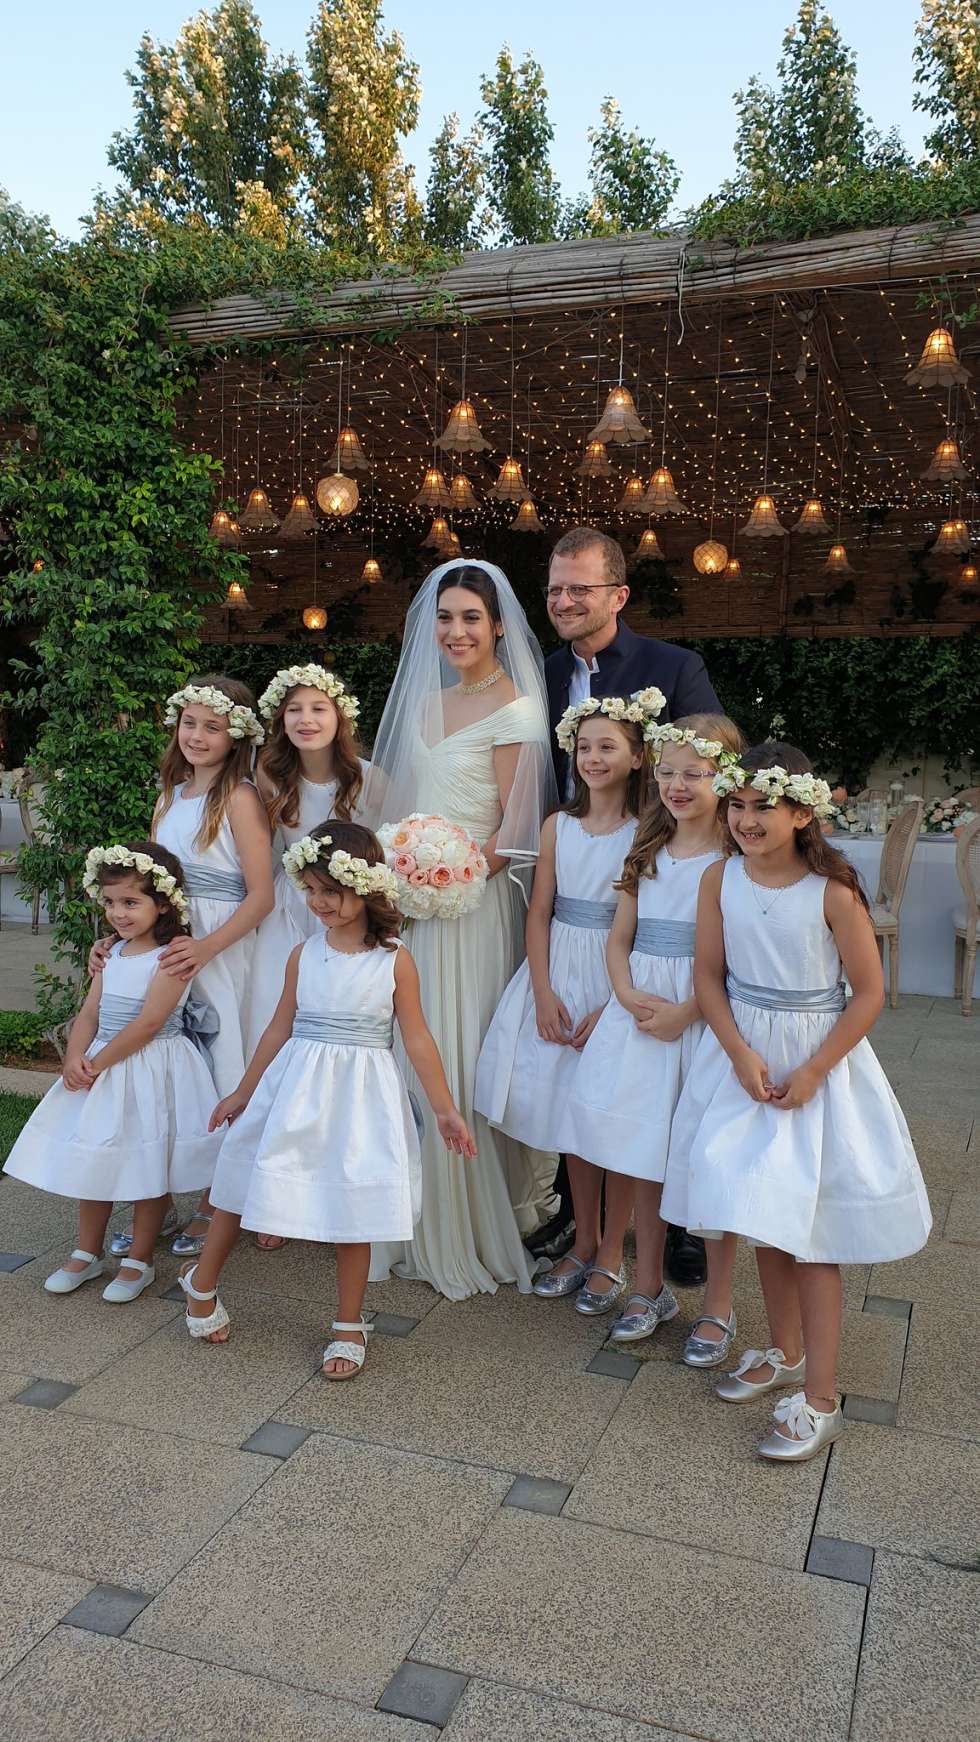 A Magical Shabby Chic Outdoor Wedding in Jordan